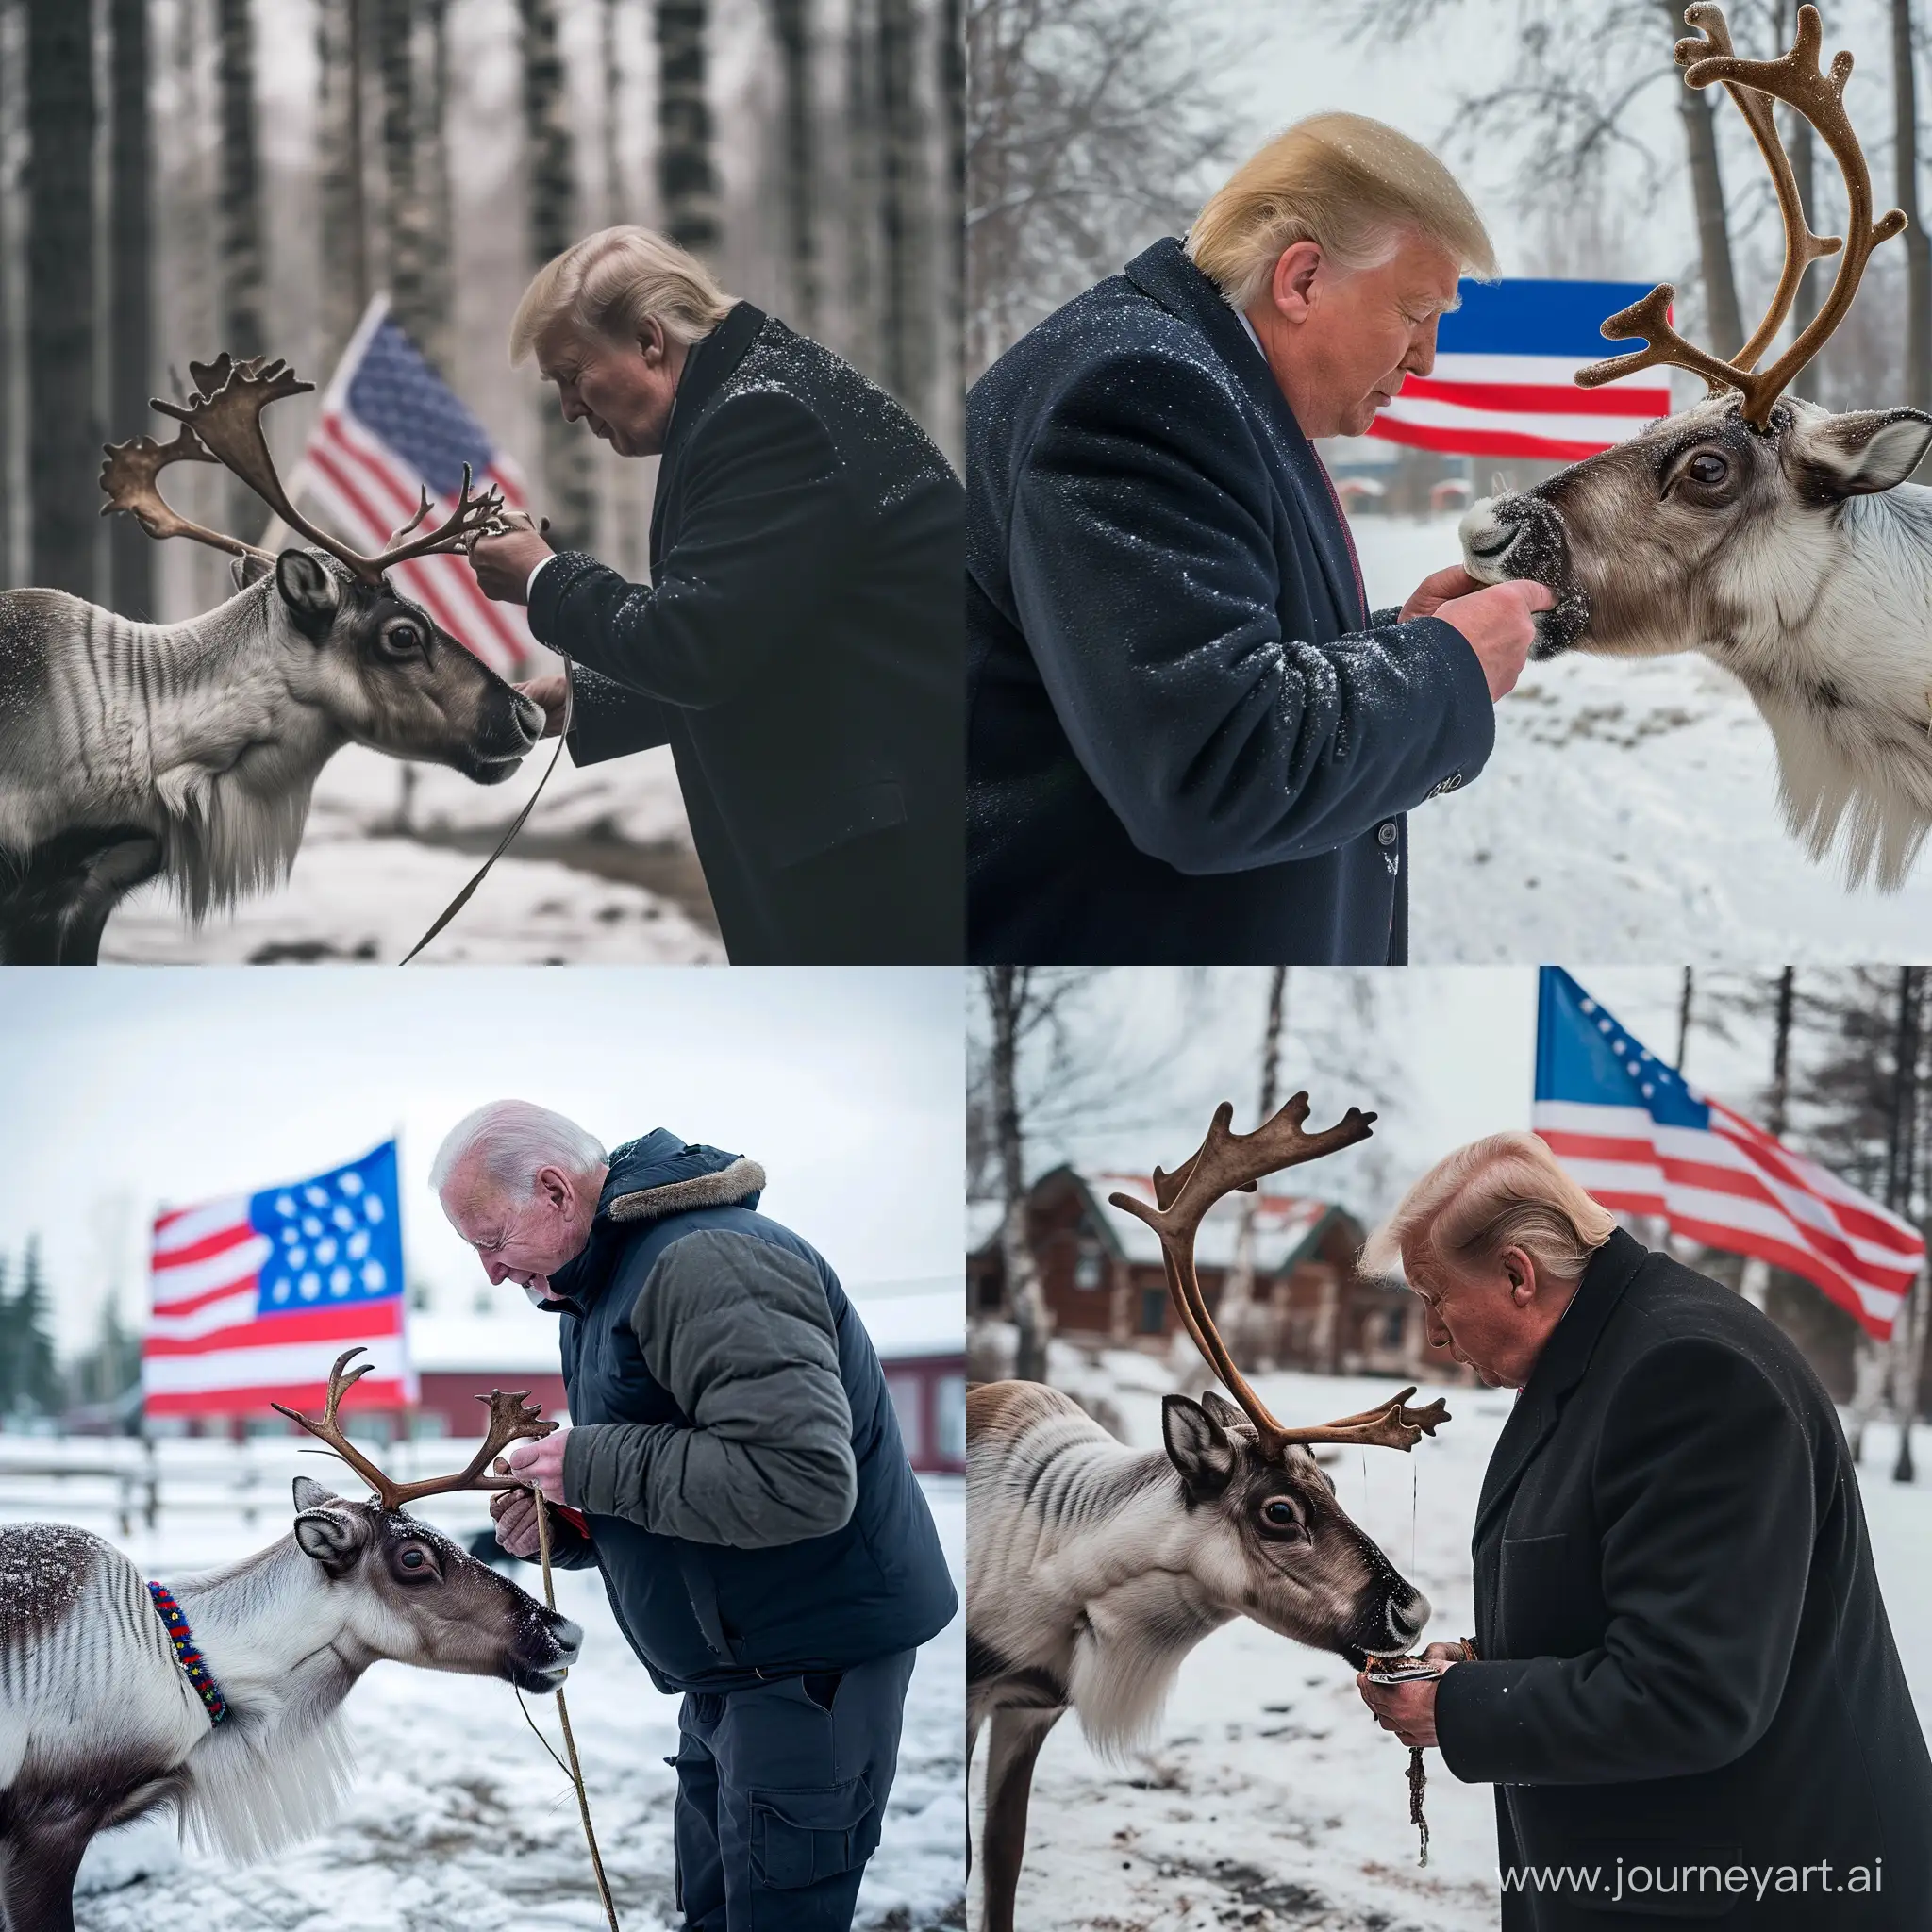 USA-President-Feeding-Reindeer-in-Snow-with-Yakutia-Flag-Background